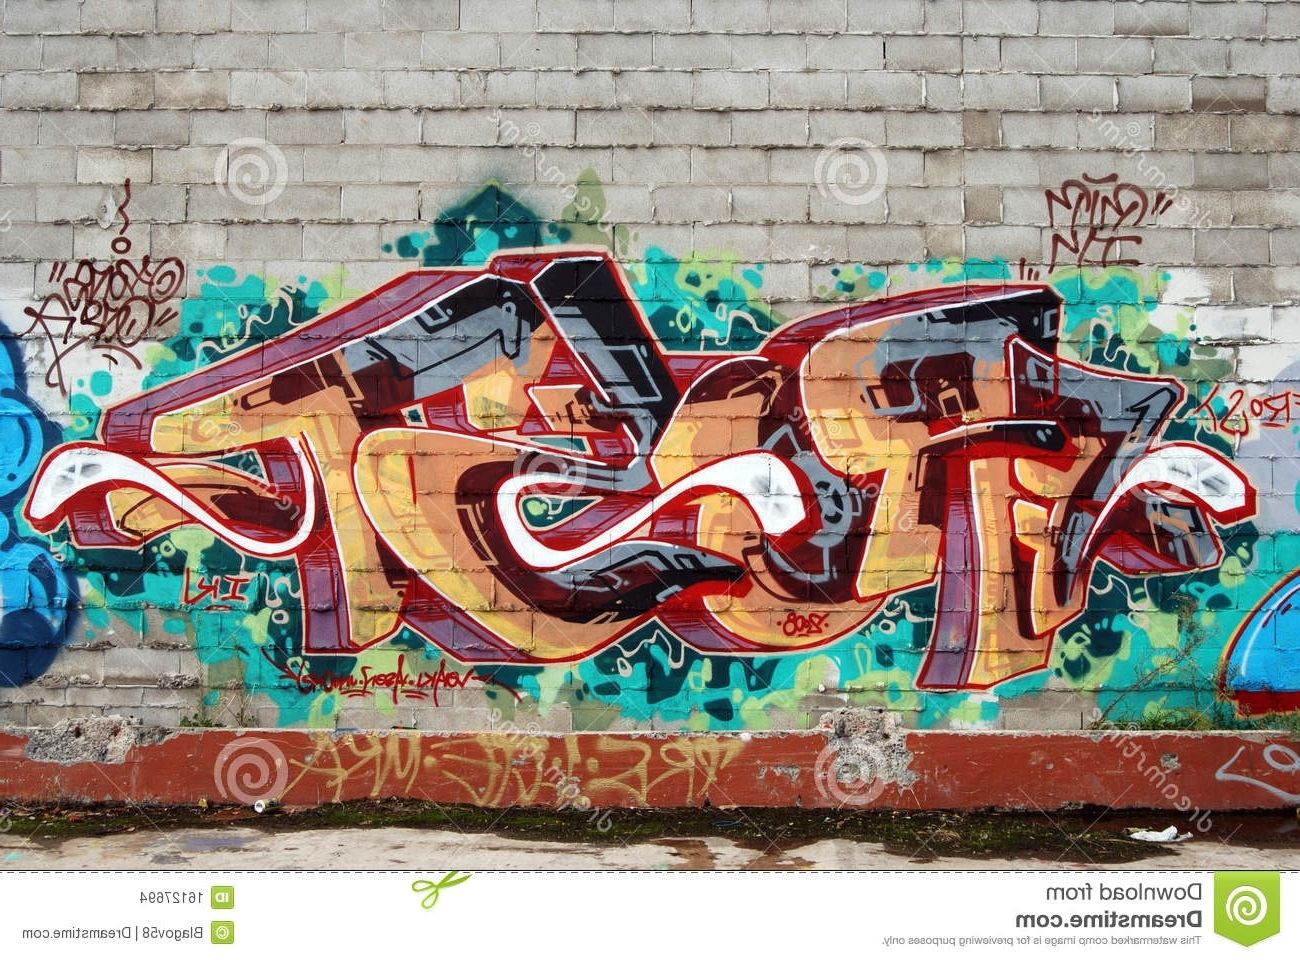 Graffiti Wall Art Regarding Popular A Wall Vandalized With Street Graffiti Art Stock Photo – Image Of (View 6 of 20)